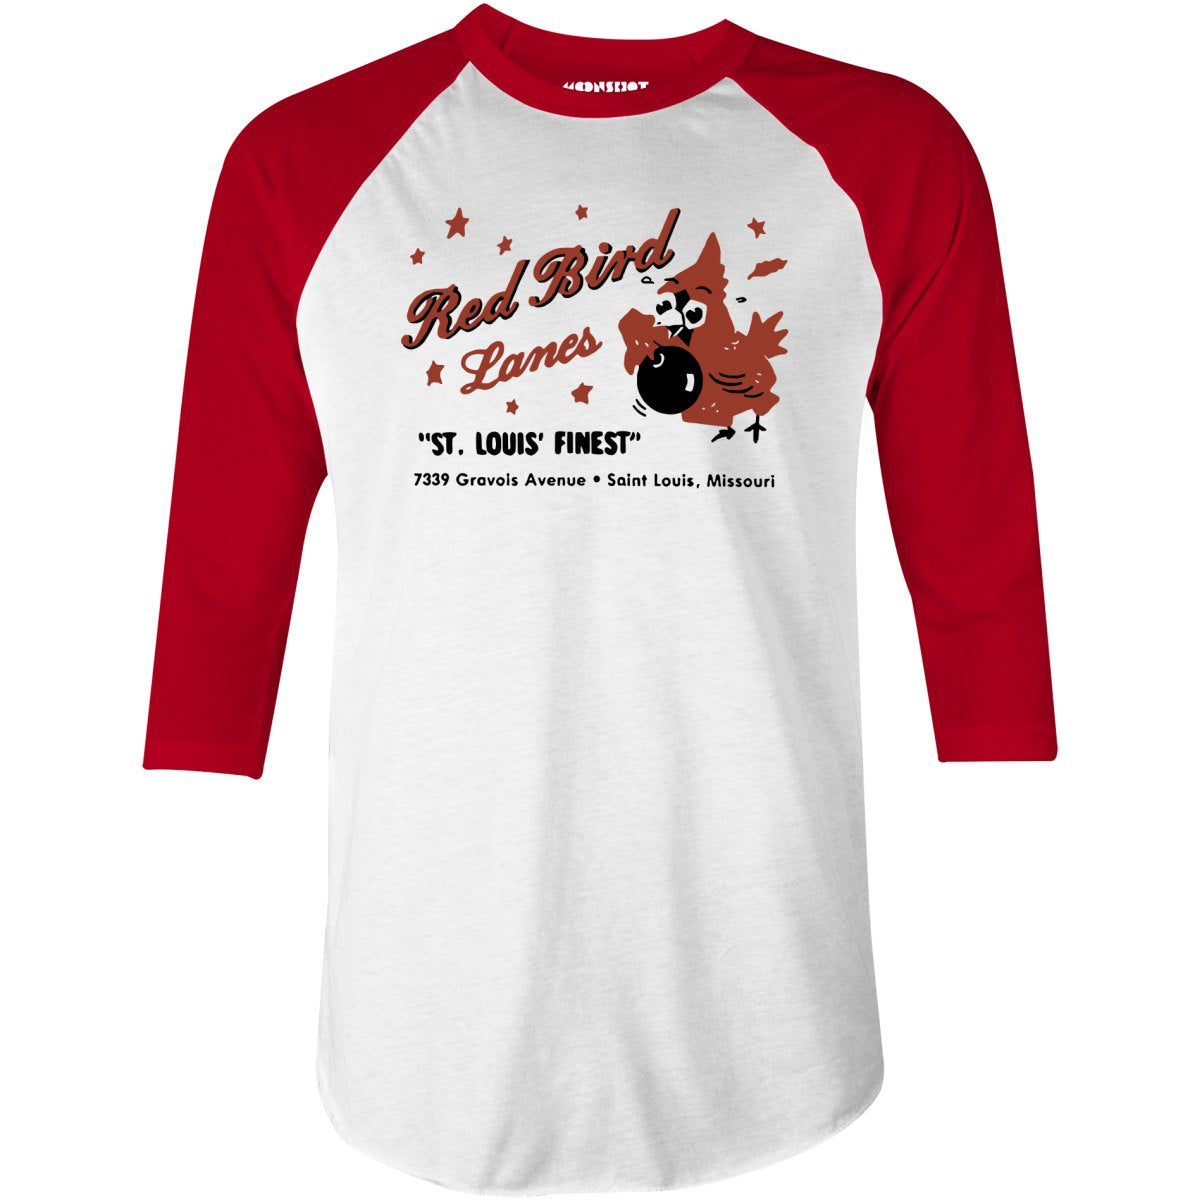 Red Bird Lanes v1 - St. Louis, MO - Vintage Bowling Alley - 3/4 Sleeve Raglan T-Shirt